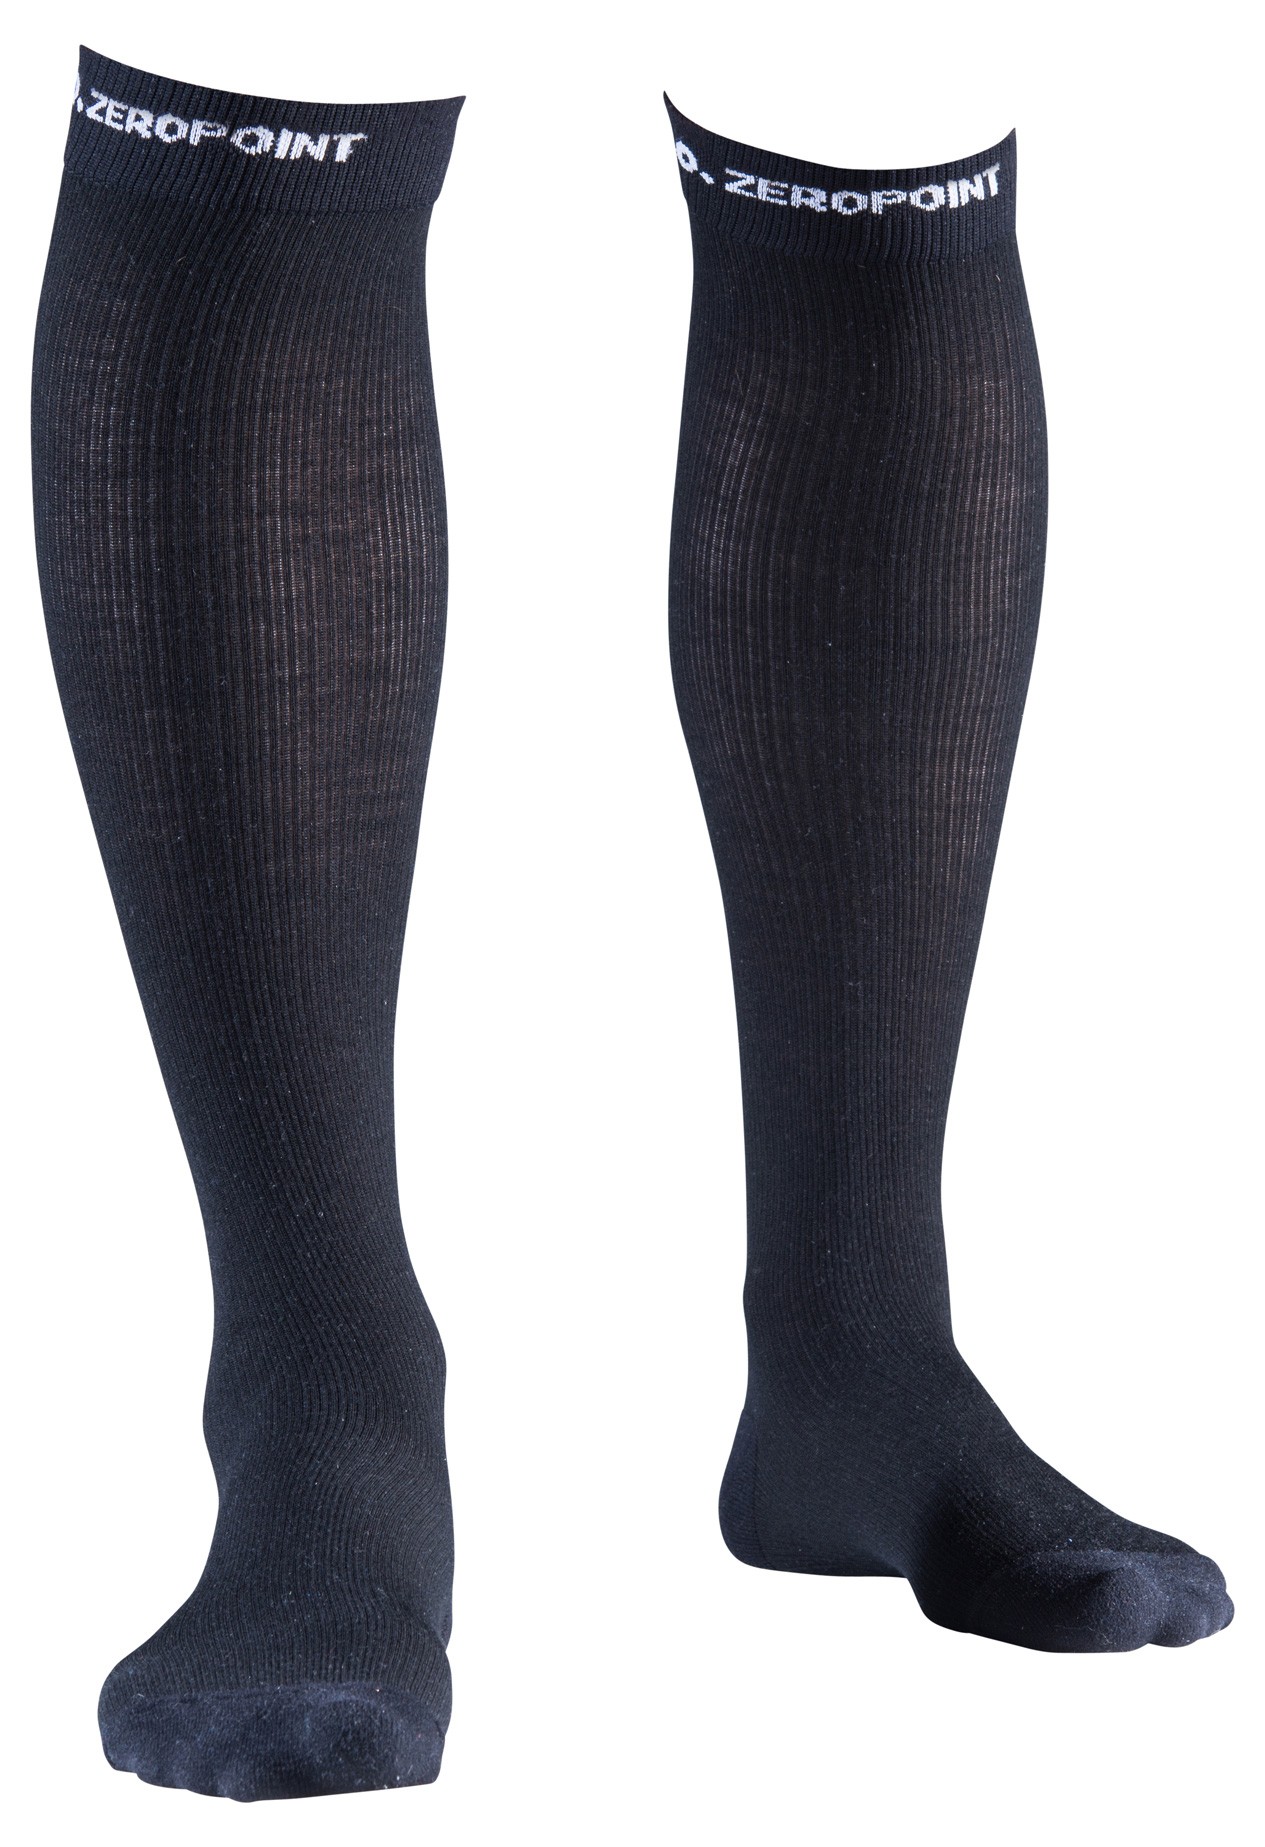 ZeroPoint Merino Wool Compression Socks are made of 50 % Merino Wool ...